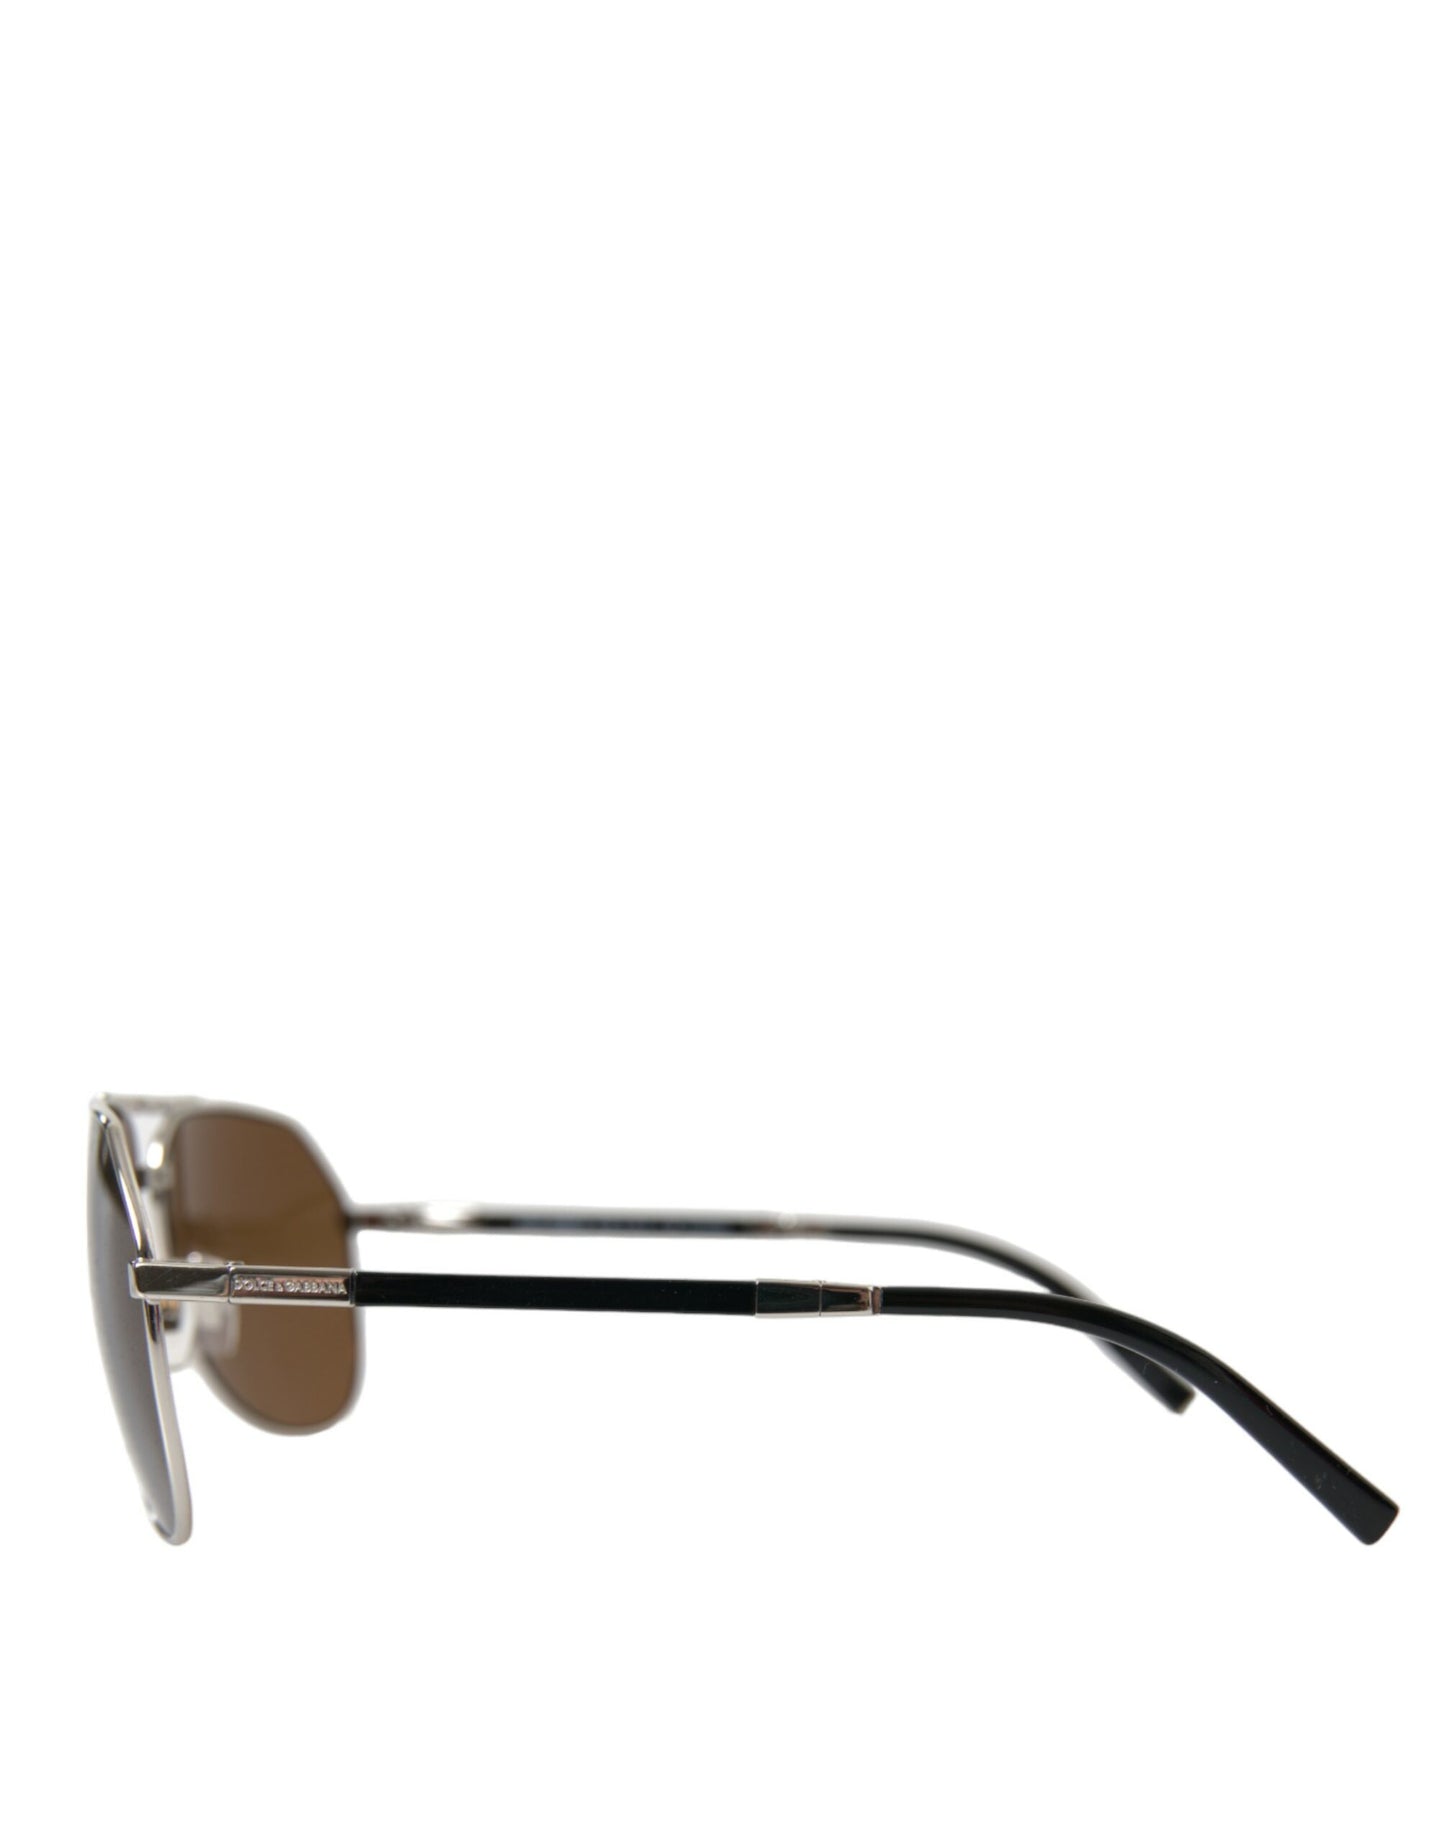 Fashionsarah.com Fashionsarah.com Dolce & Gabbana Sleek Silver Metal Sunglasses for Men